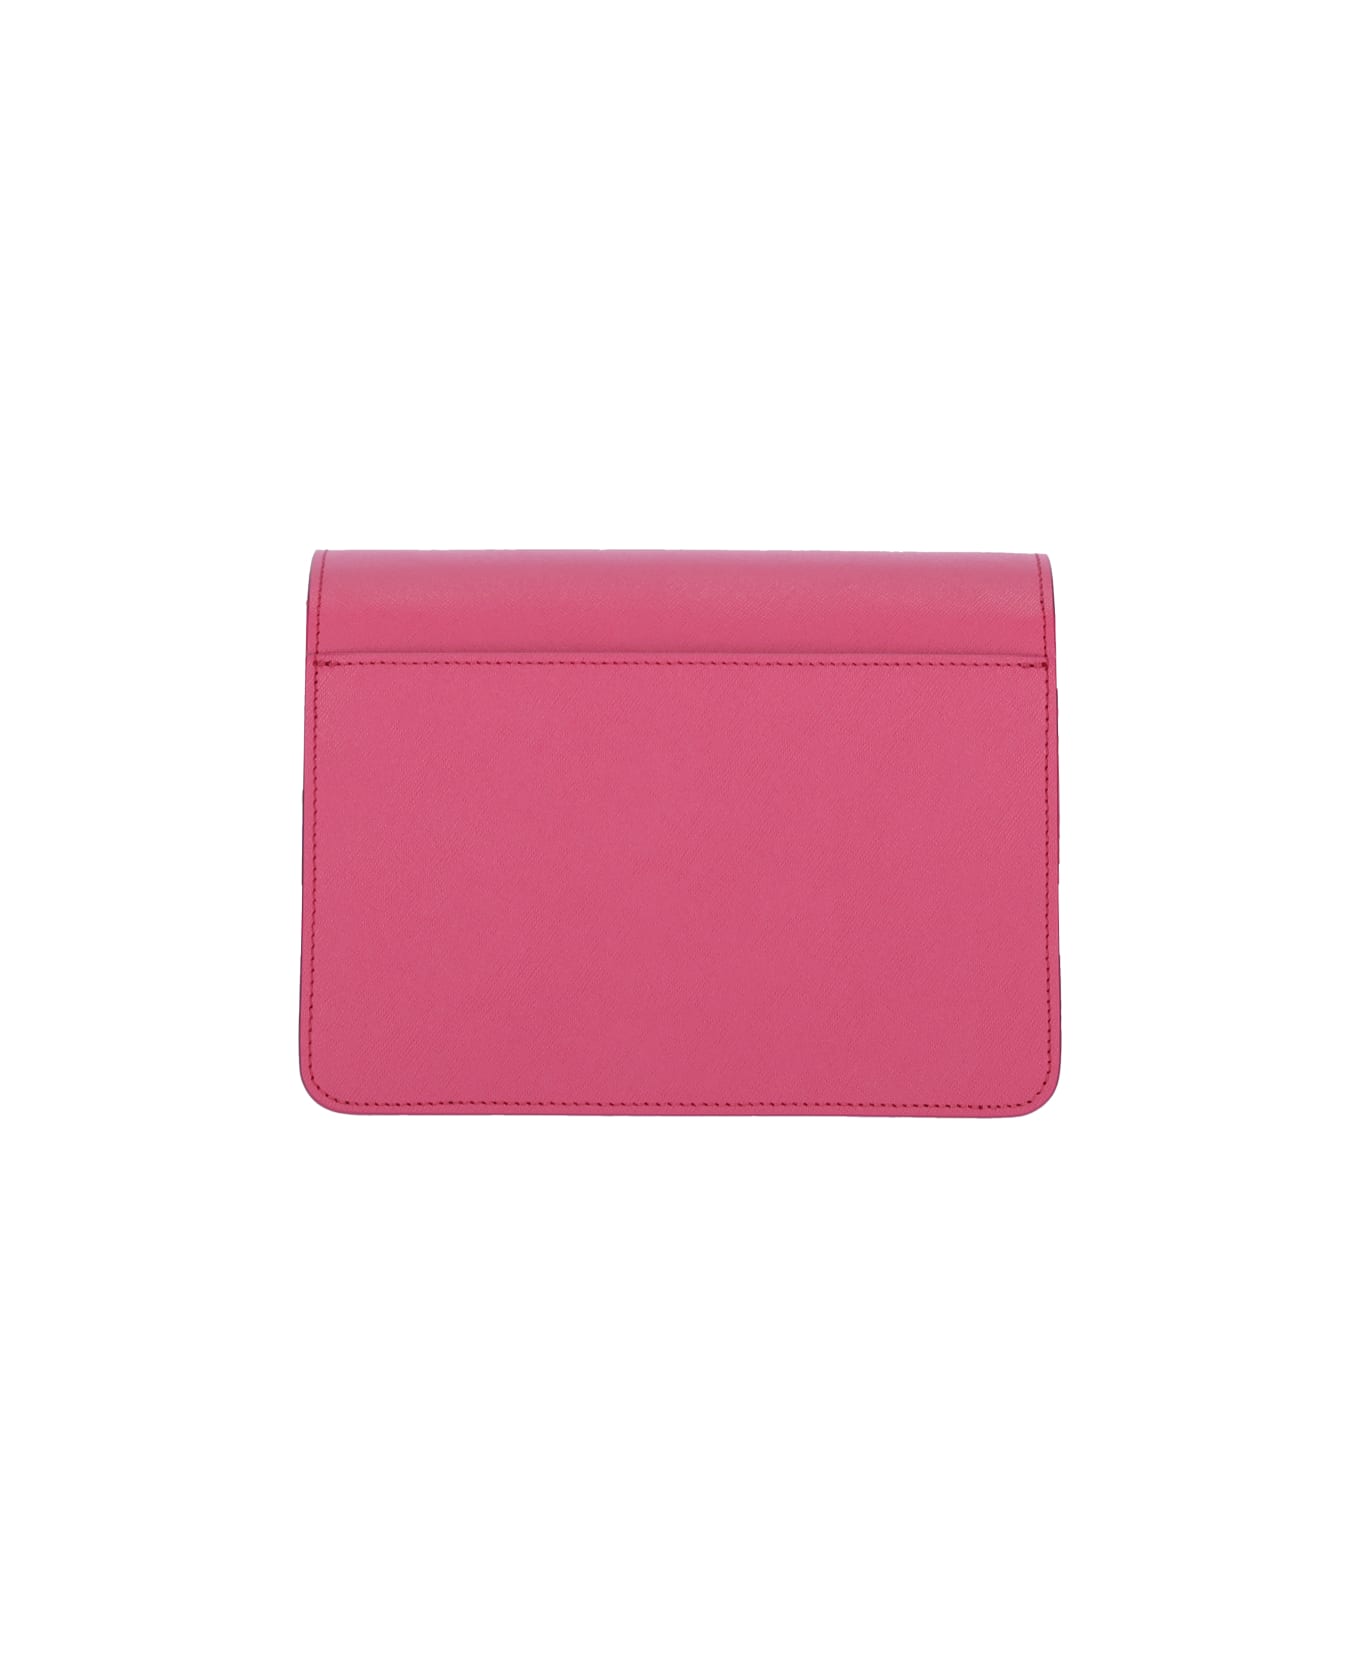 Marni Trunk Medium Shoulder Bag - Pink